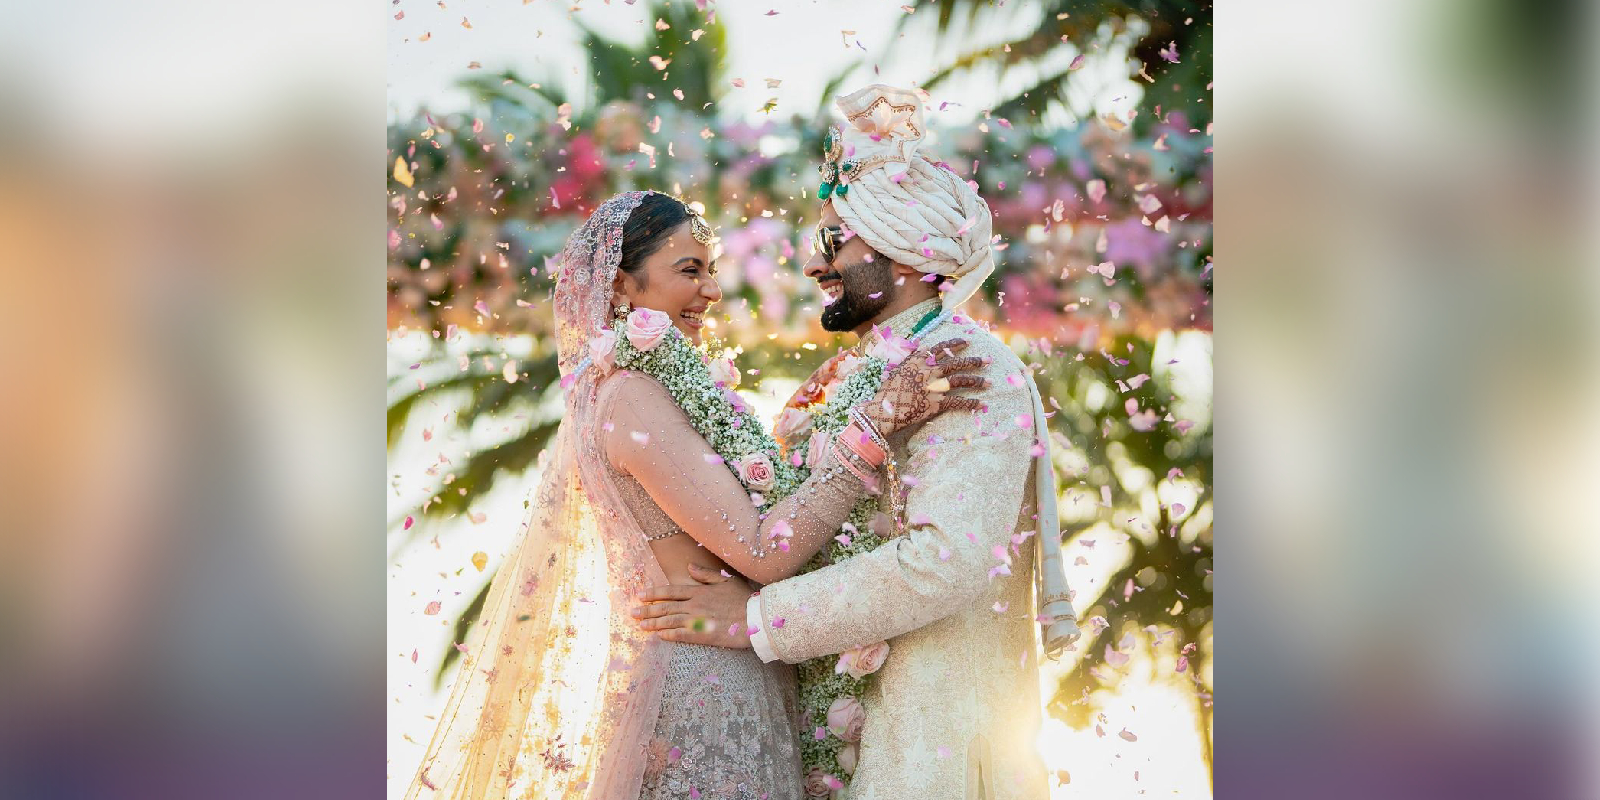 Gallery: Wedding pics of Rakul Preet Singh and Jackky Bhagnani